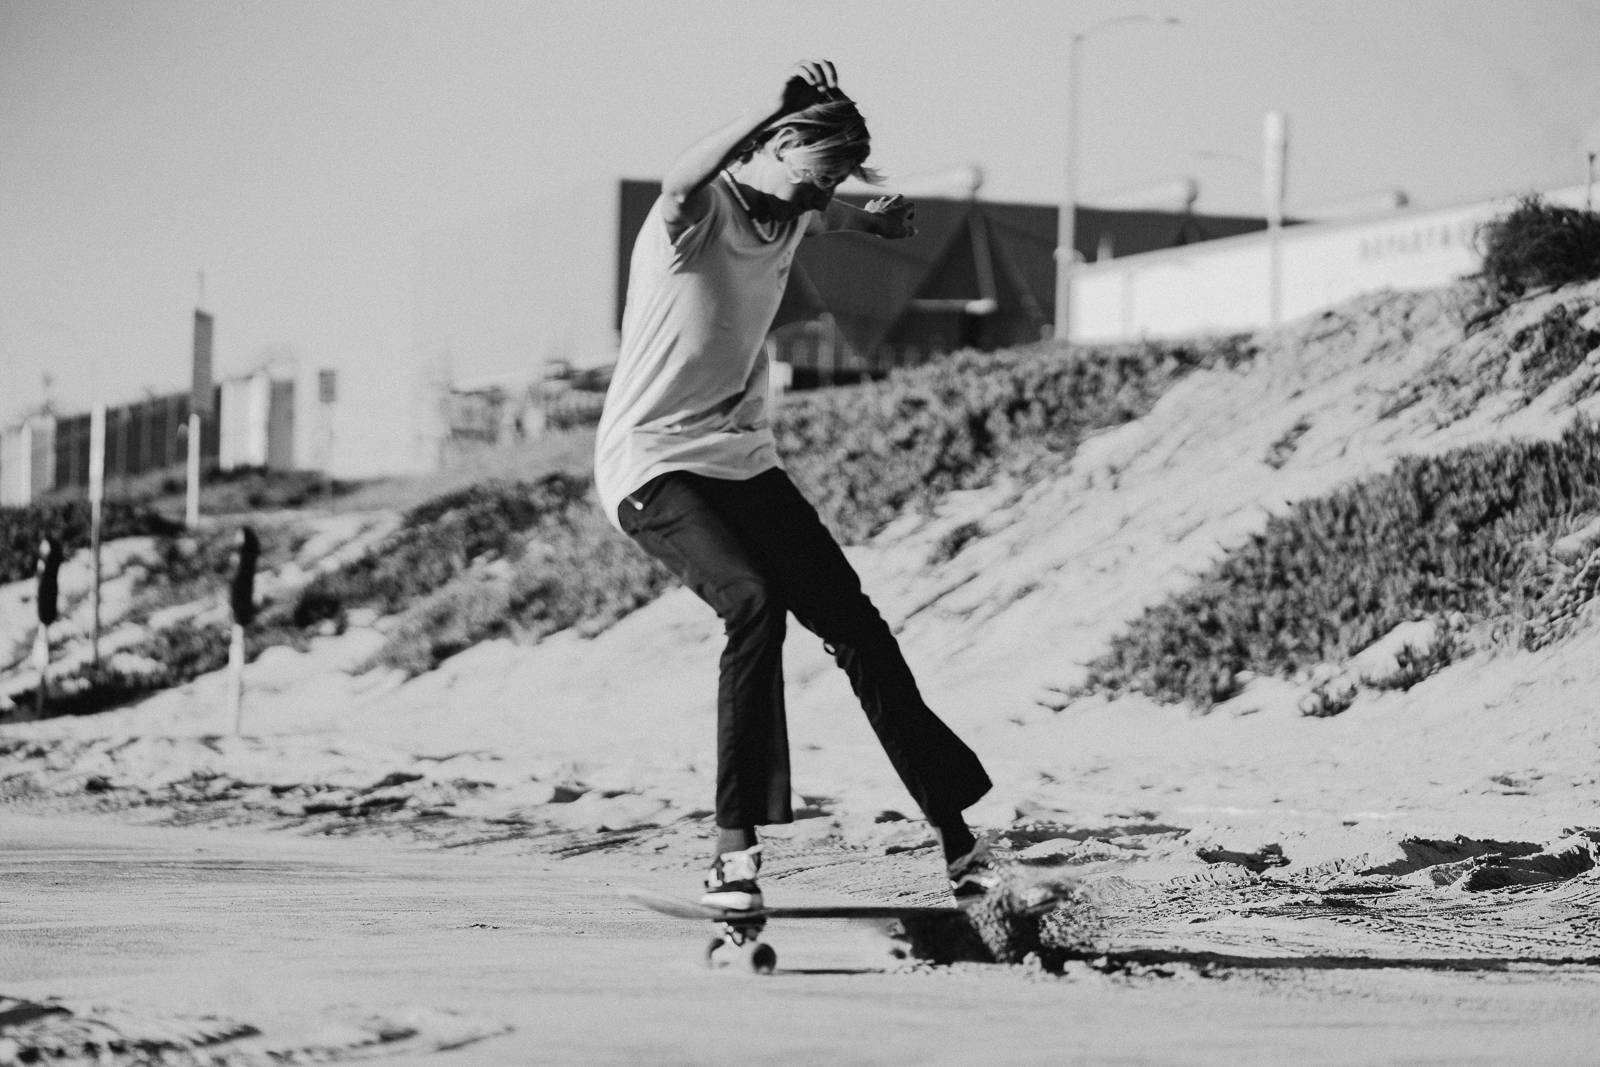 Shane Murphy | SurfBored Team Rider Skateboarding